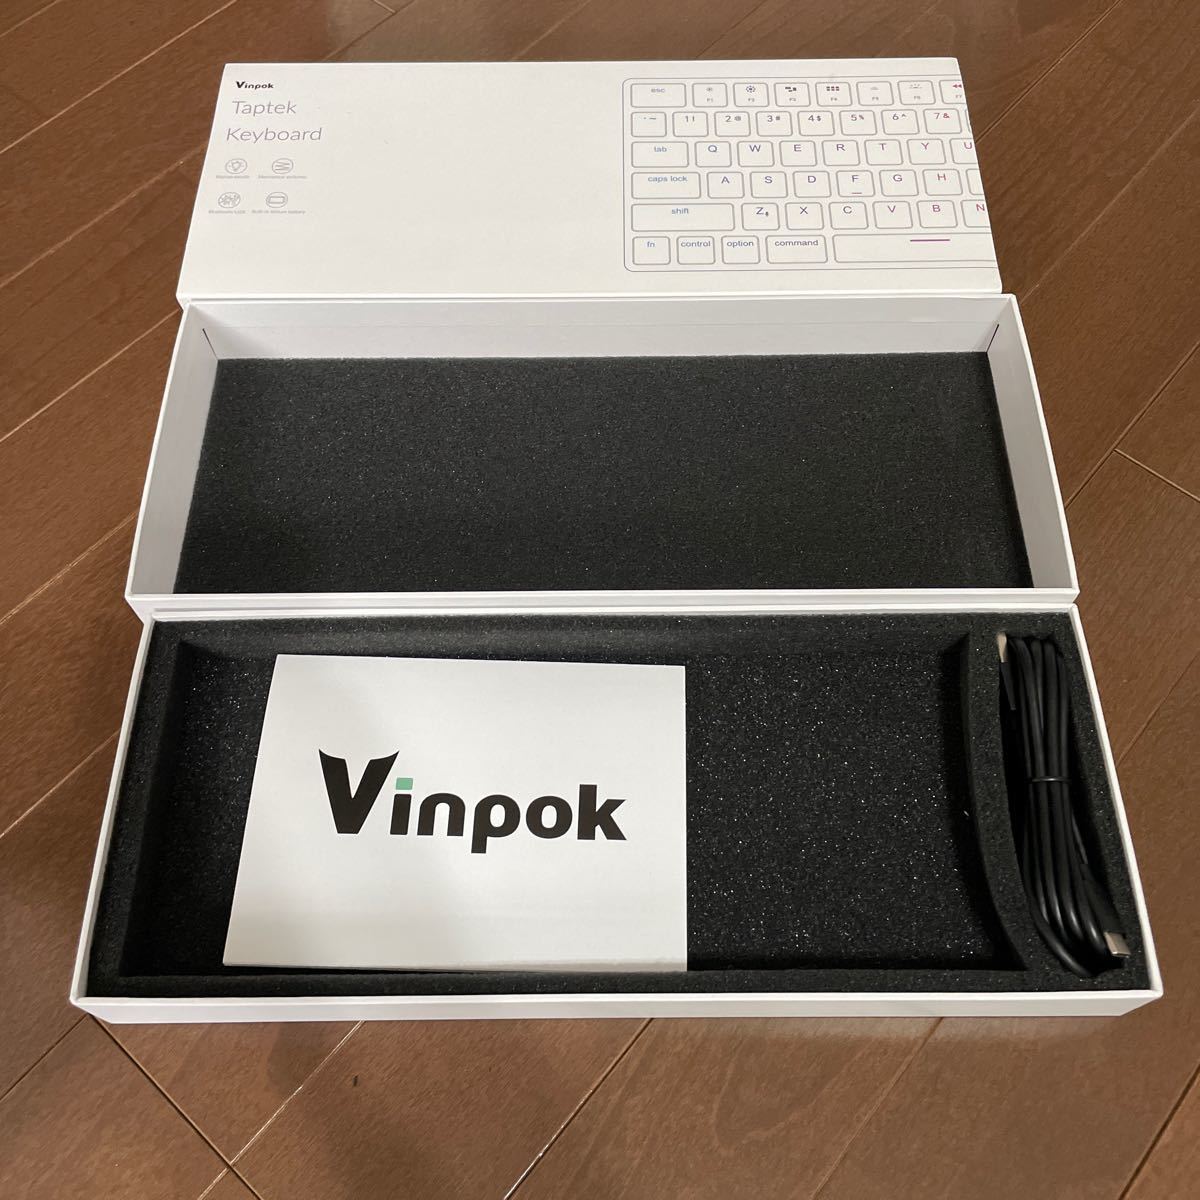 Vinpok Taptek 黒 Mac版 US配列 Bluetoothキーボード